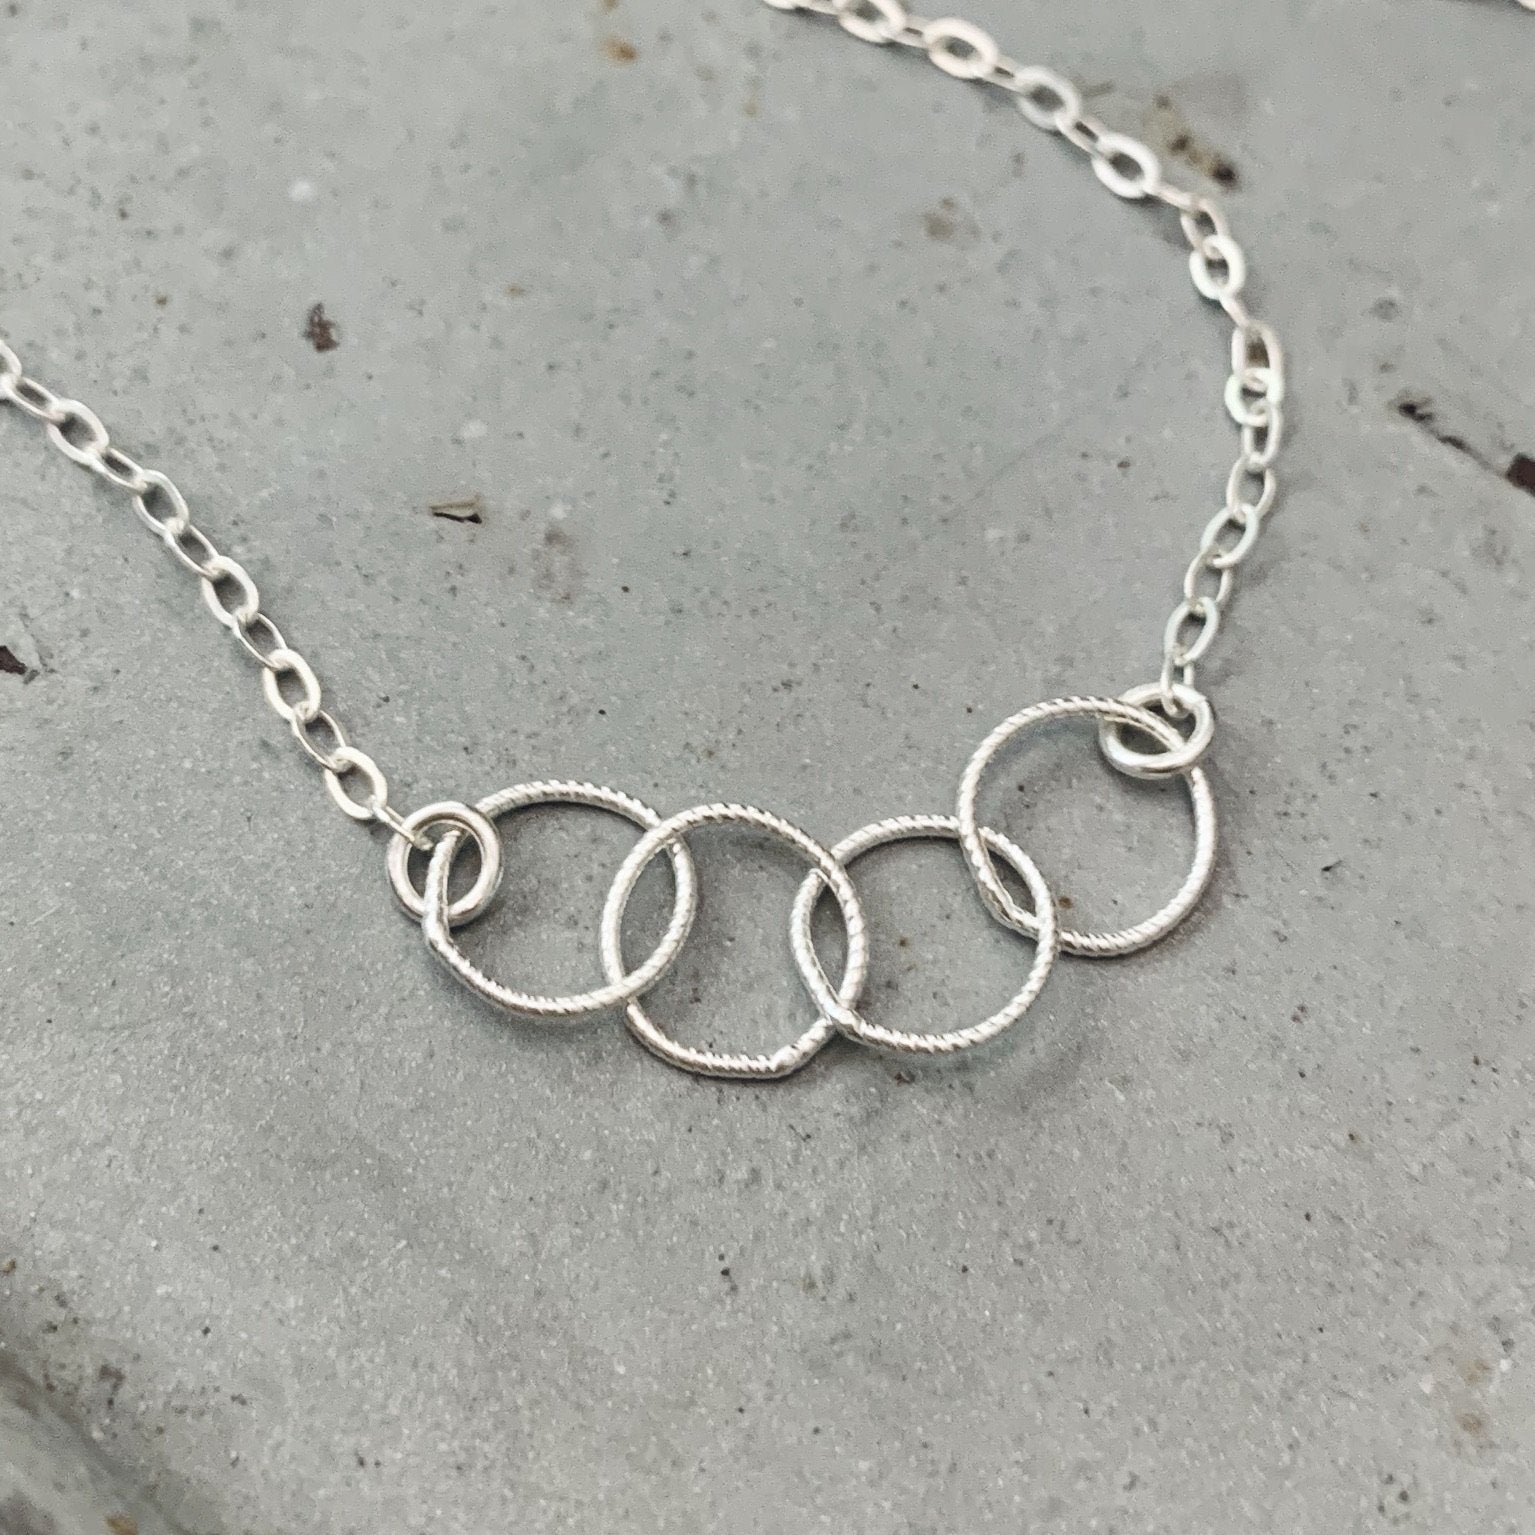 Quattro Necklace - handmade interlocking four circle necklace - Foamy Wader